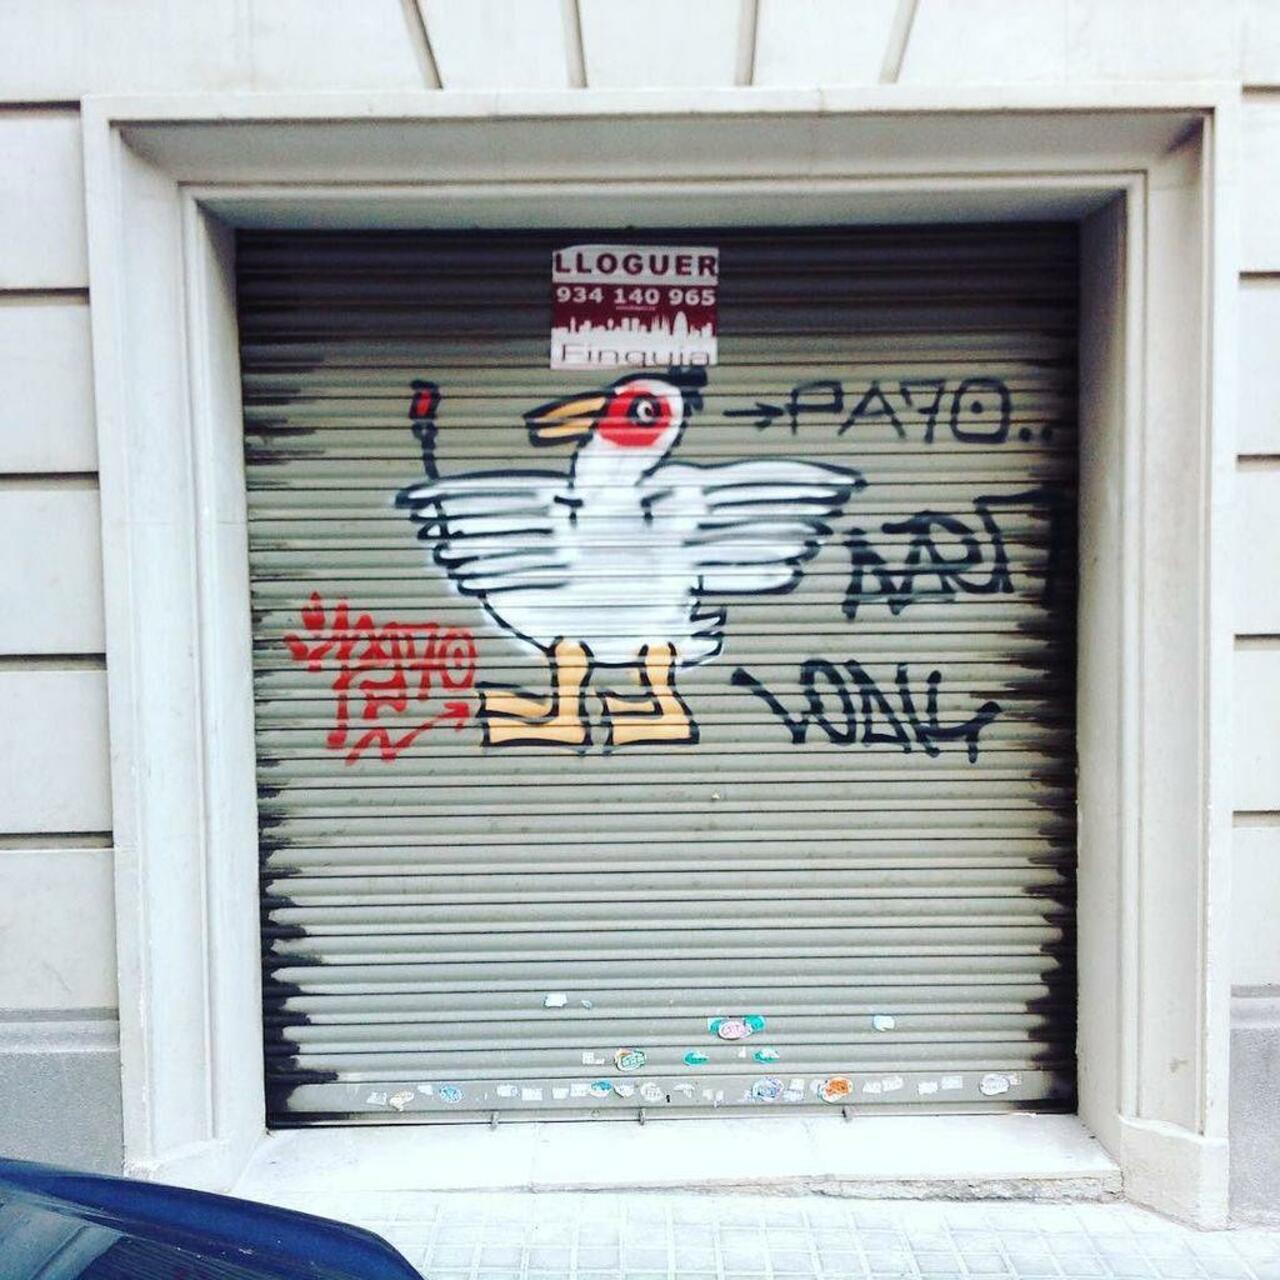 Poulet à louer #street #streetart #streetartbarcelona #graff #graffiti #wallart #sprayart #urban #urbain #urbainart… http://t.co/KS2lGKxE5n